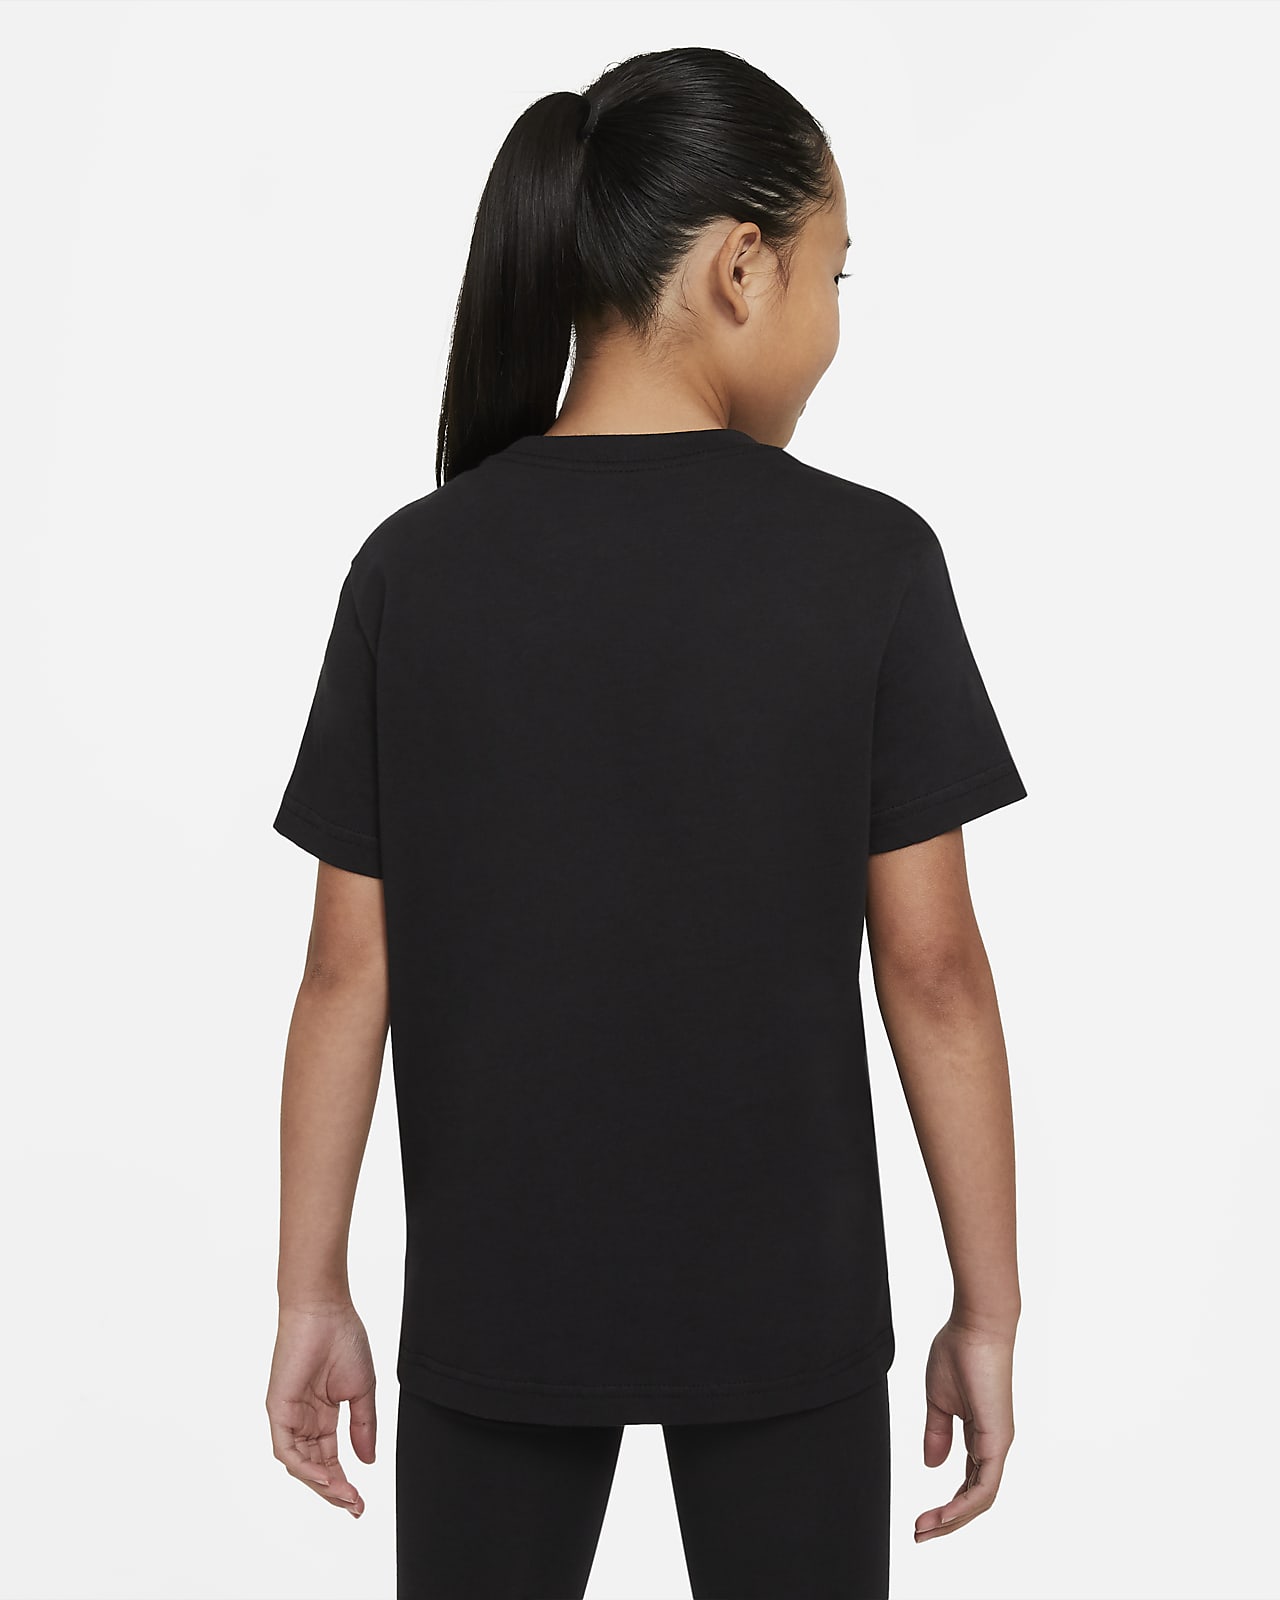 NIKE - Camiseta negra DH5750 010 Niña